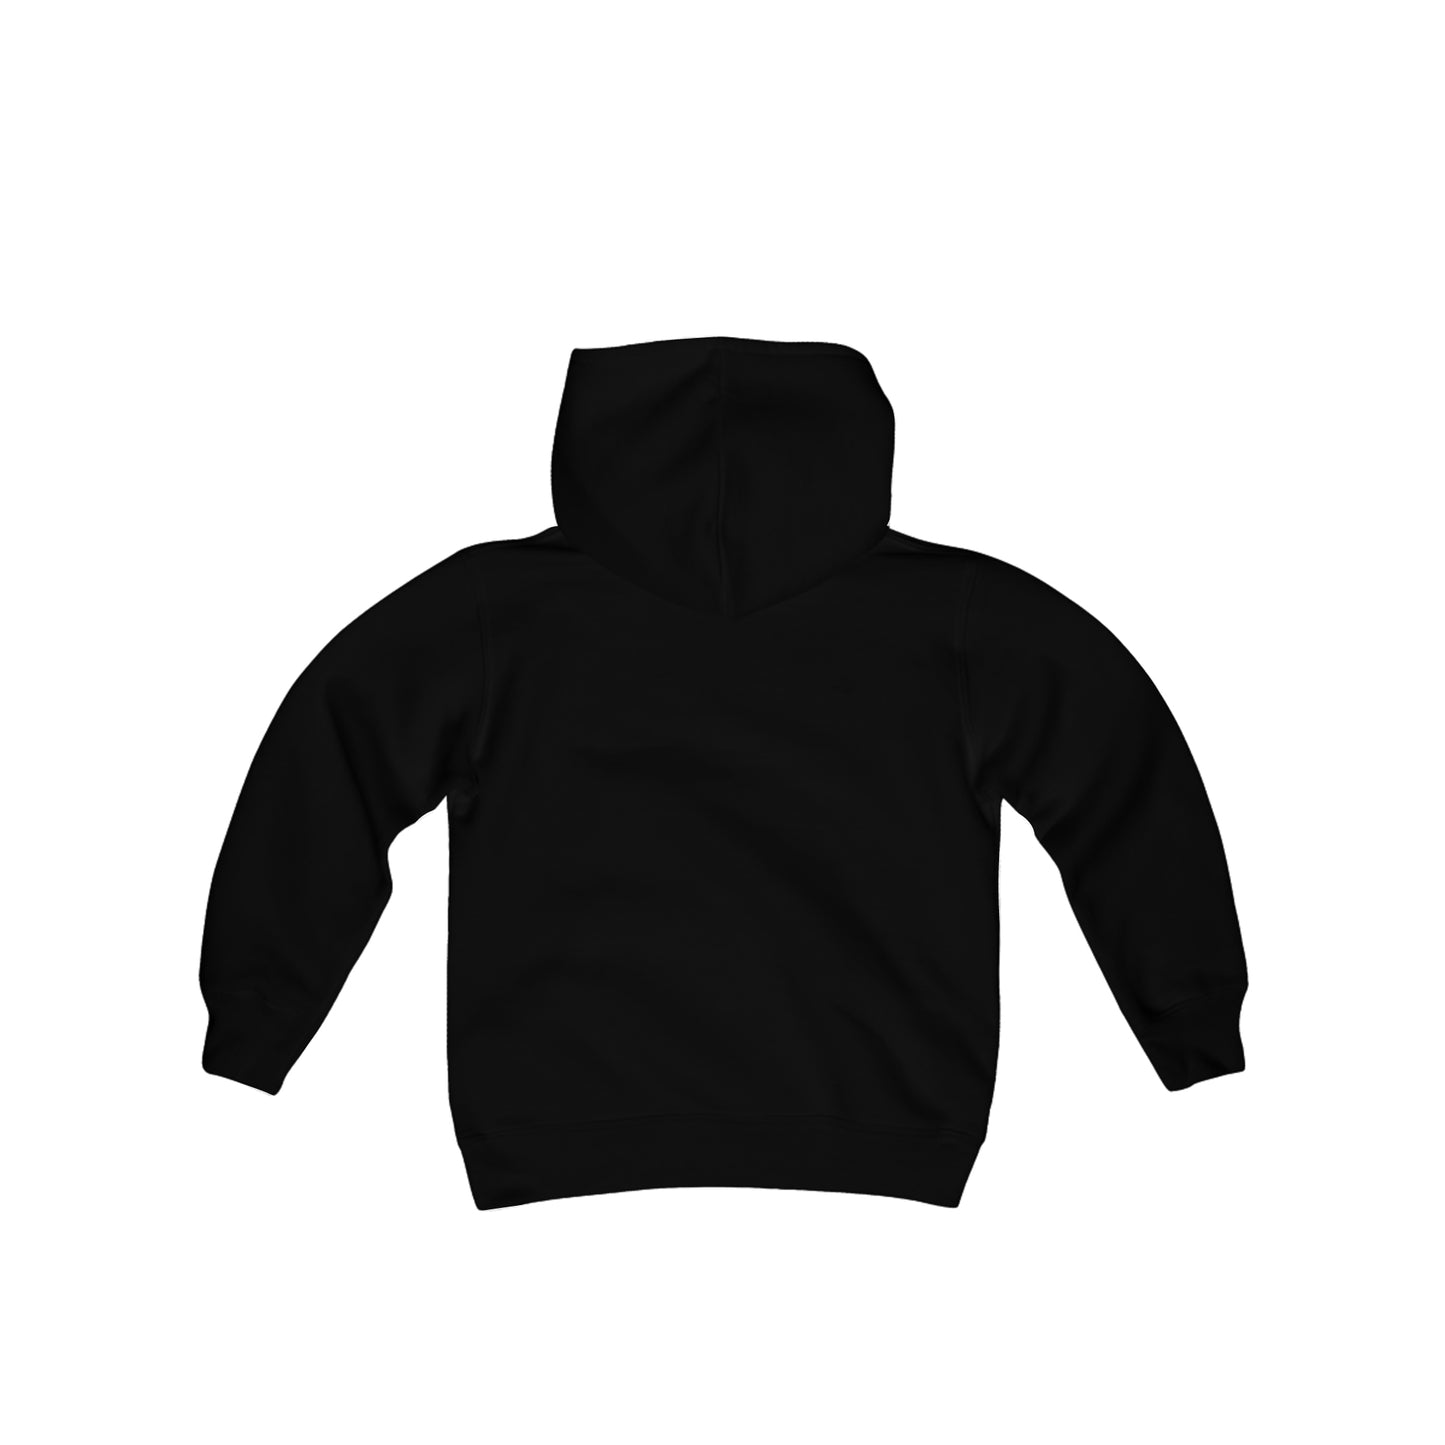 Cloudman  - Boys - Heavy Blend Hooded Sweatshirt  -  Front design